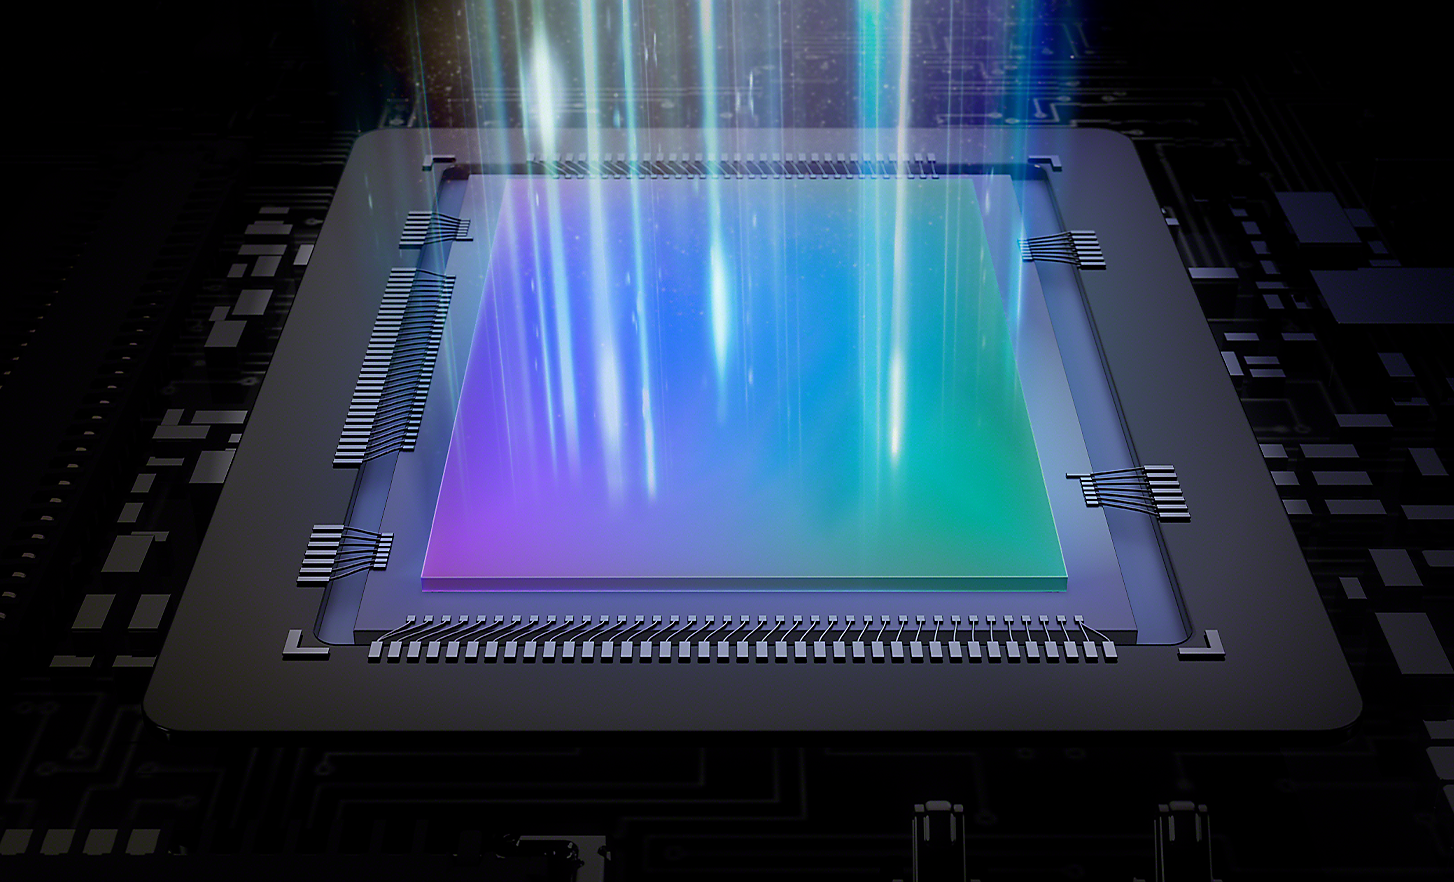 Close-up of a camera image sensor on a circuit board, capturing beams of light